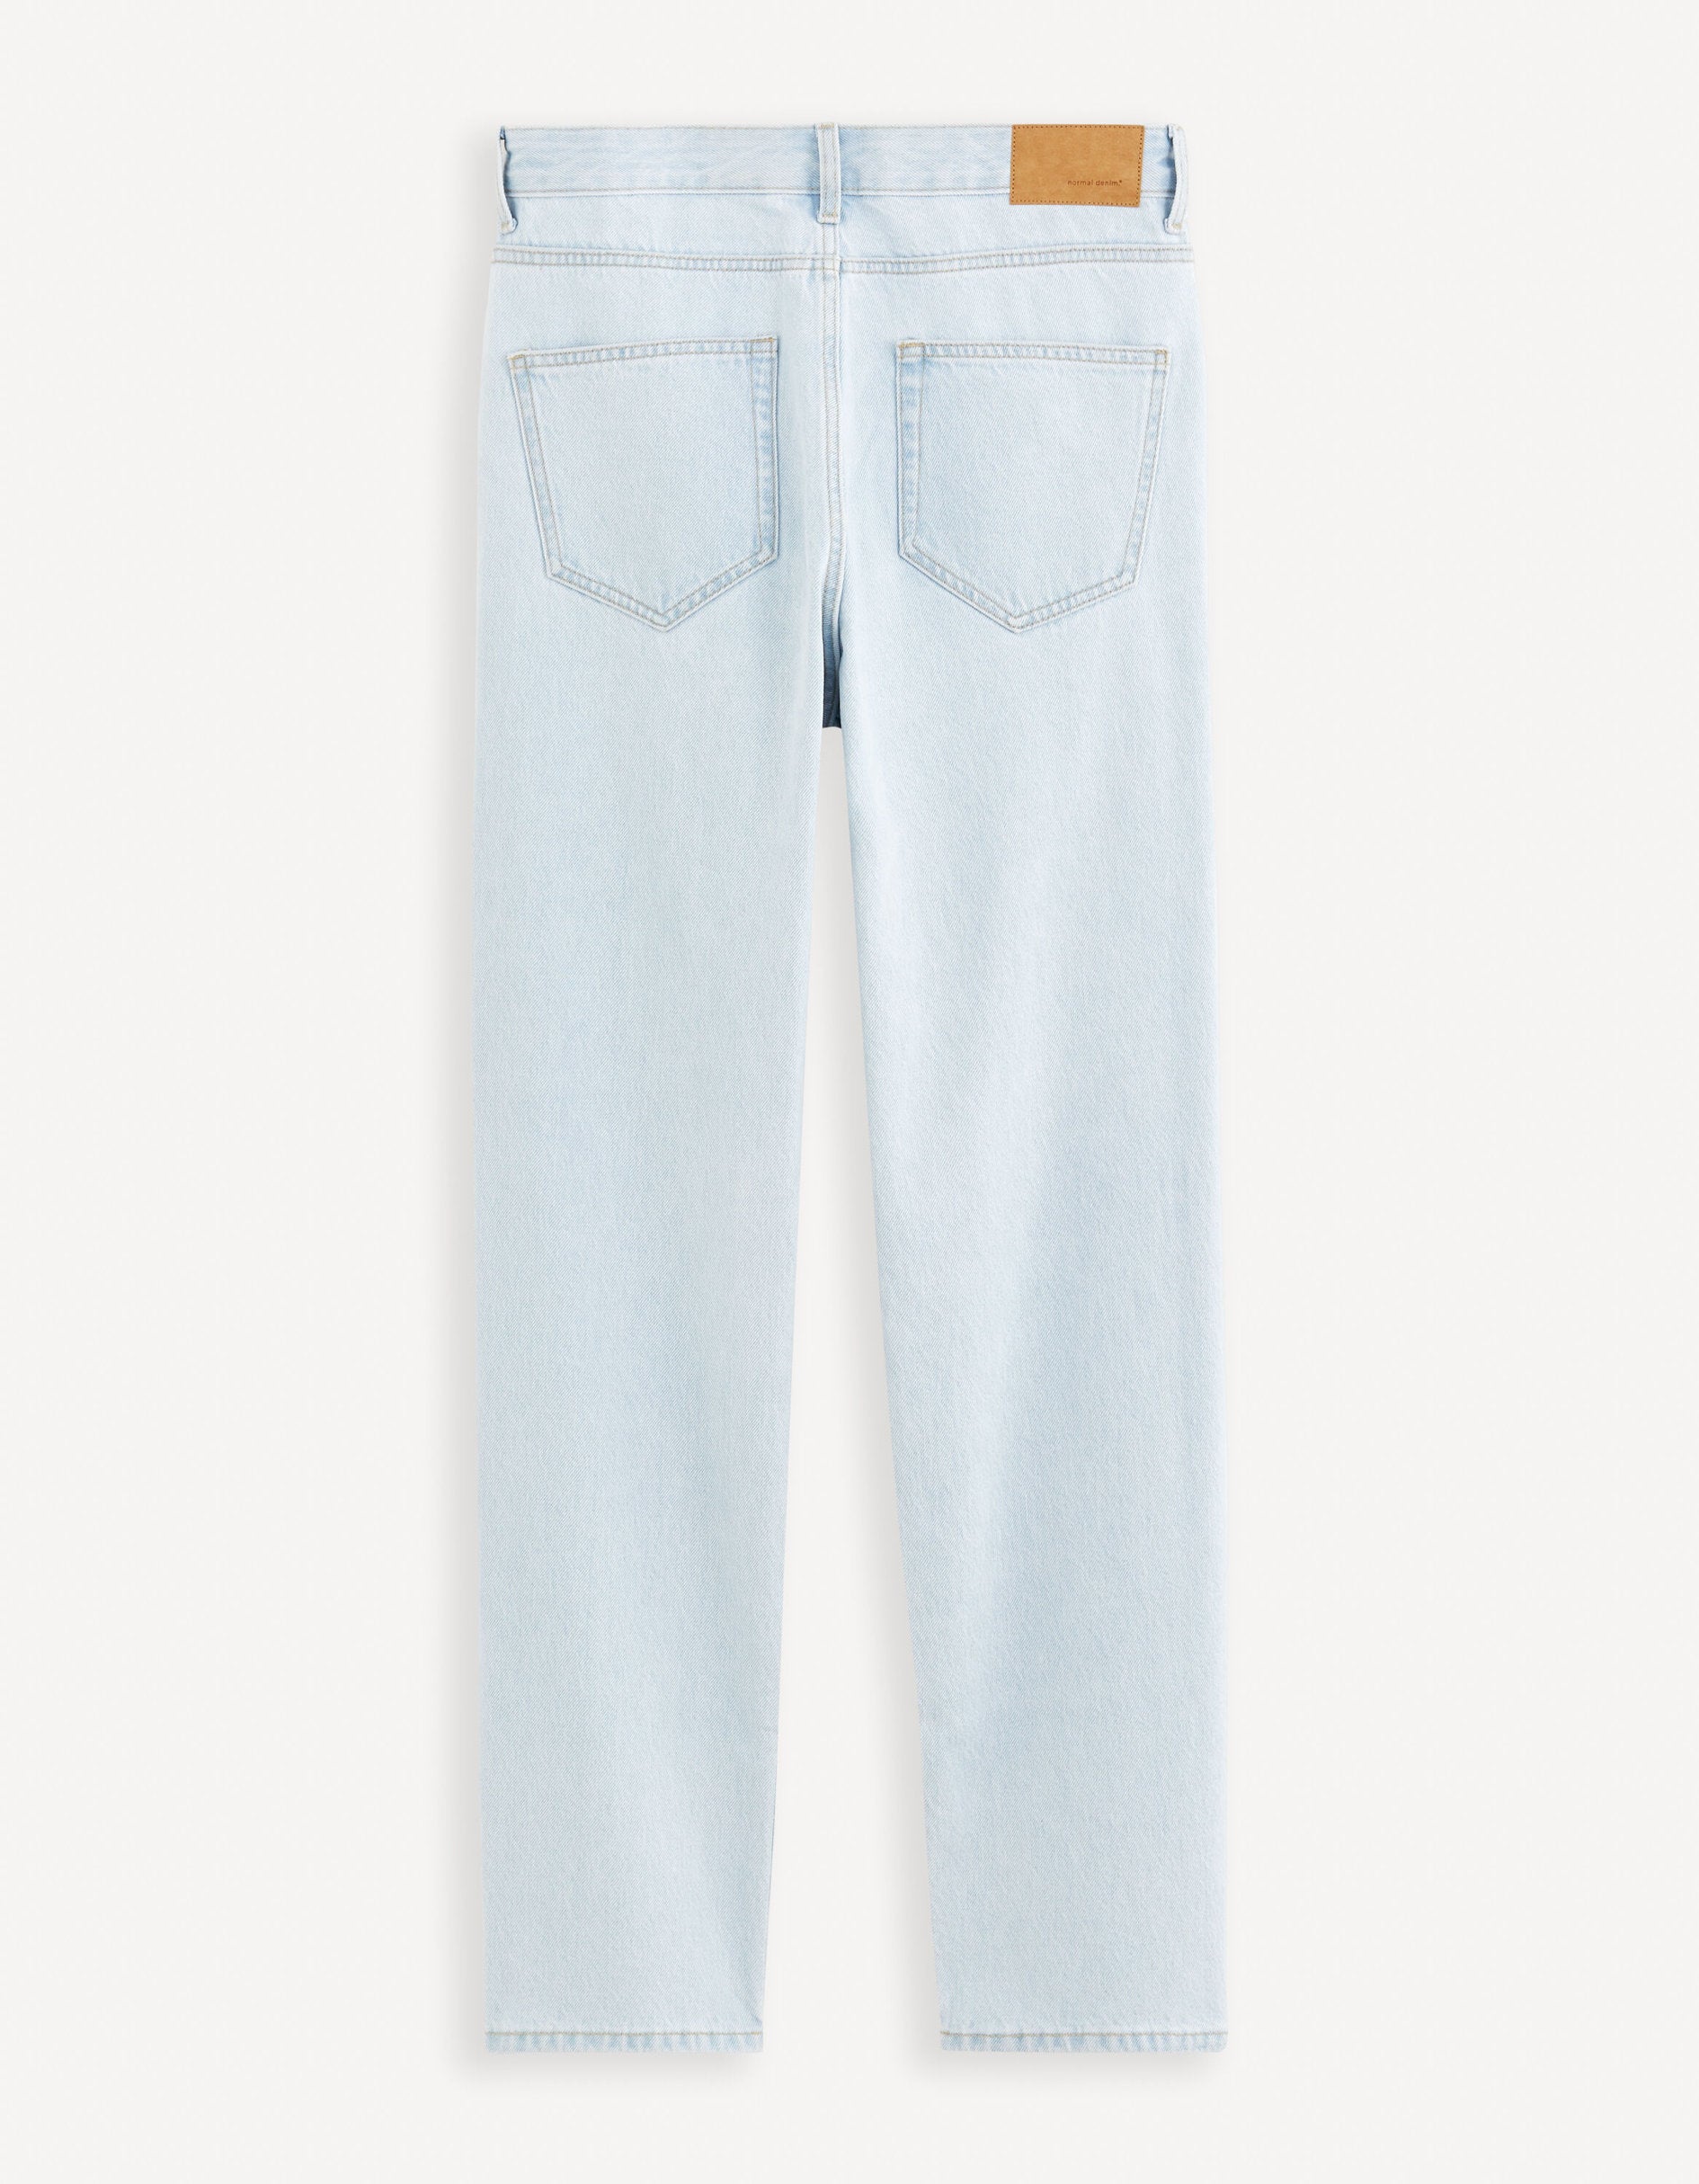 C75 Loose Jeans 100% Cotton_FOLOOSE_LIGHT BLUE_06